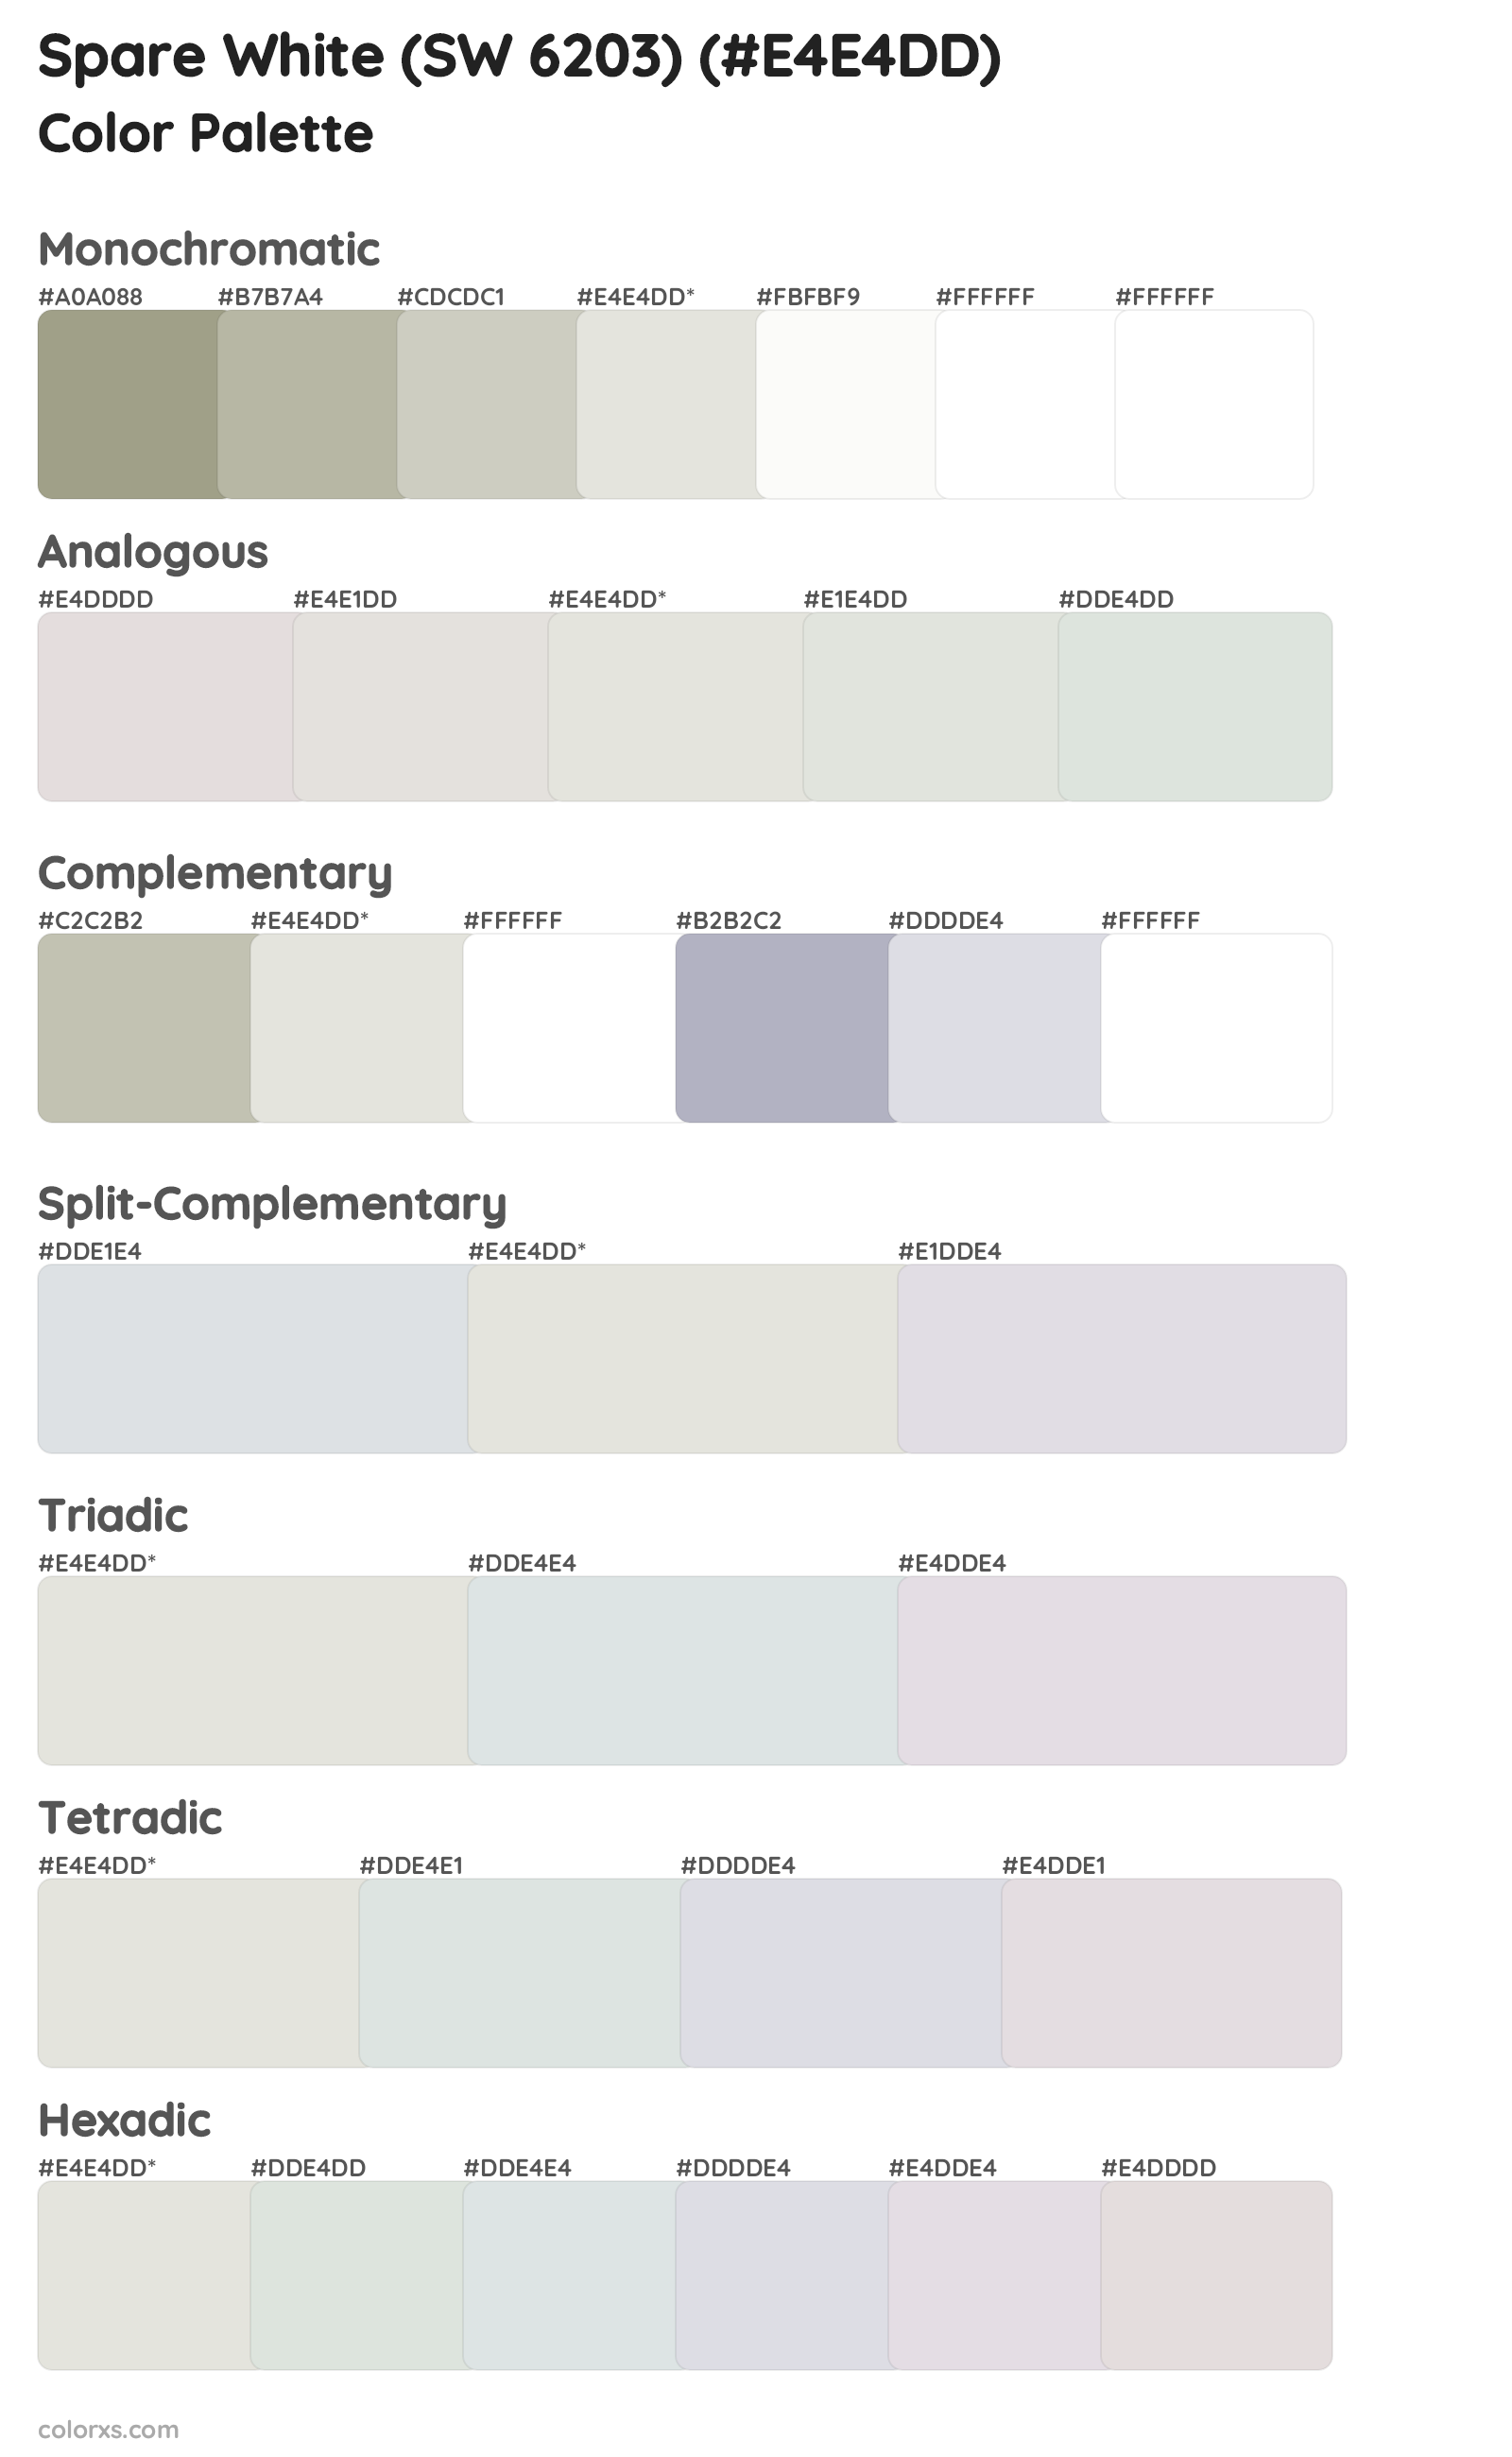 Spare White (SW 6203) Color Scheme Palettes